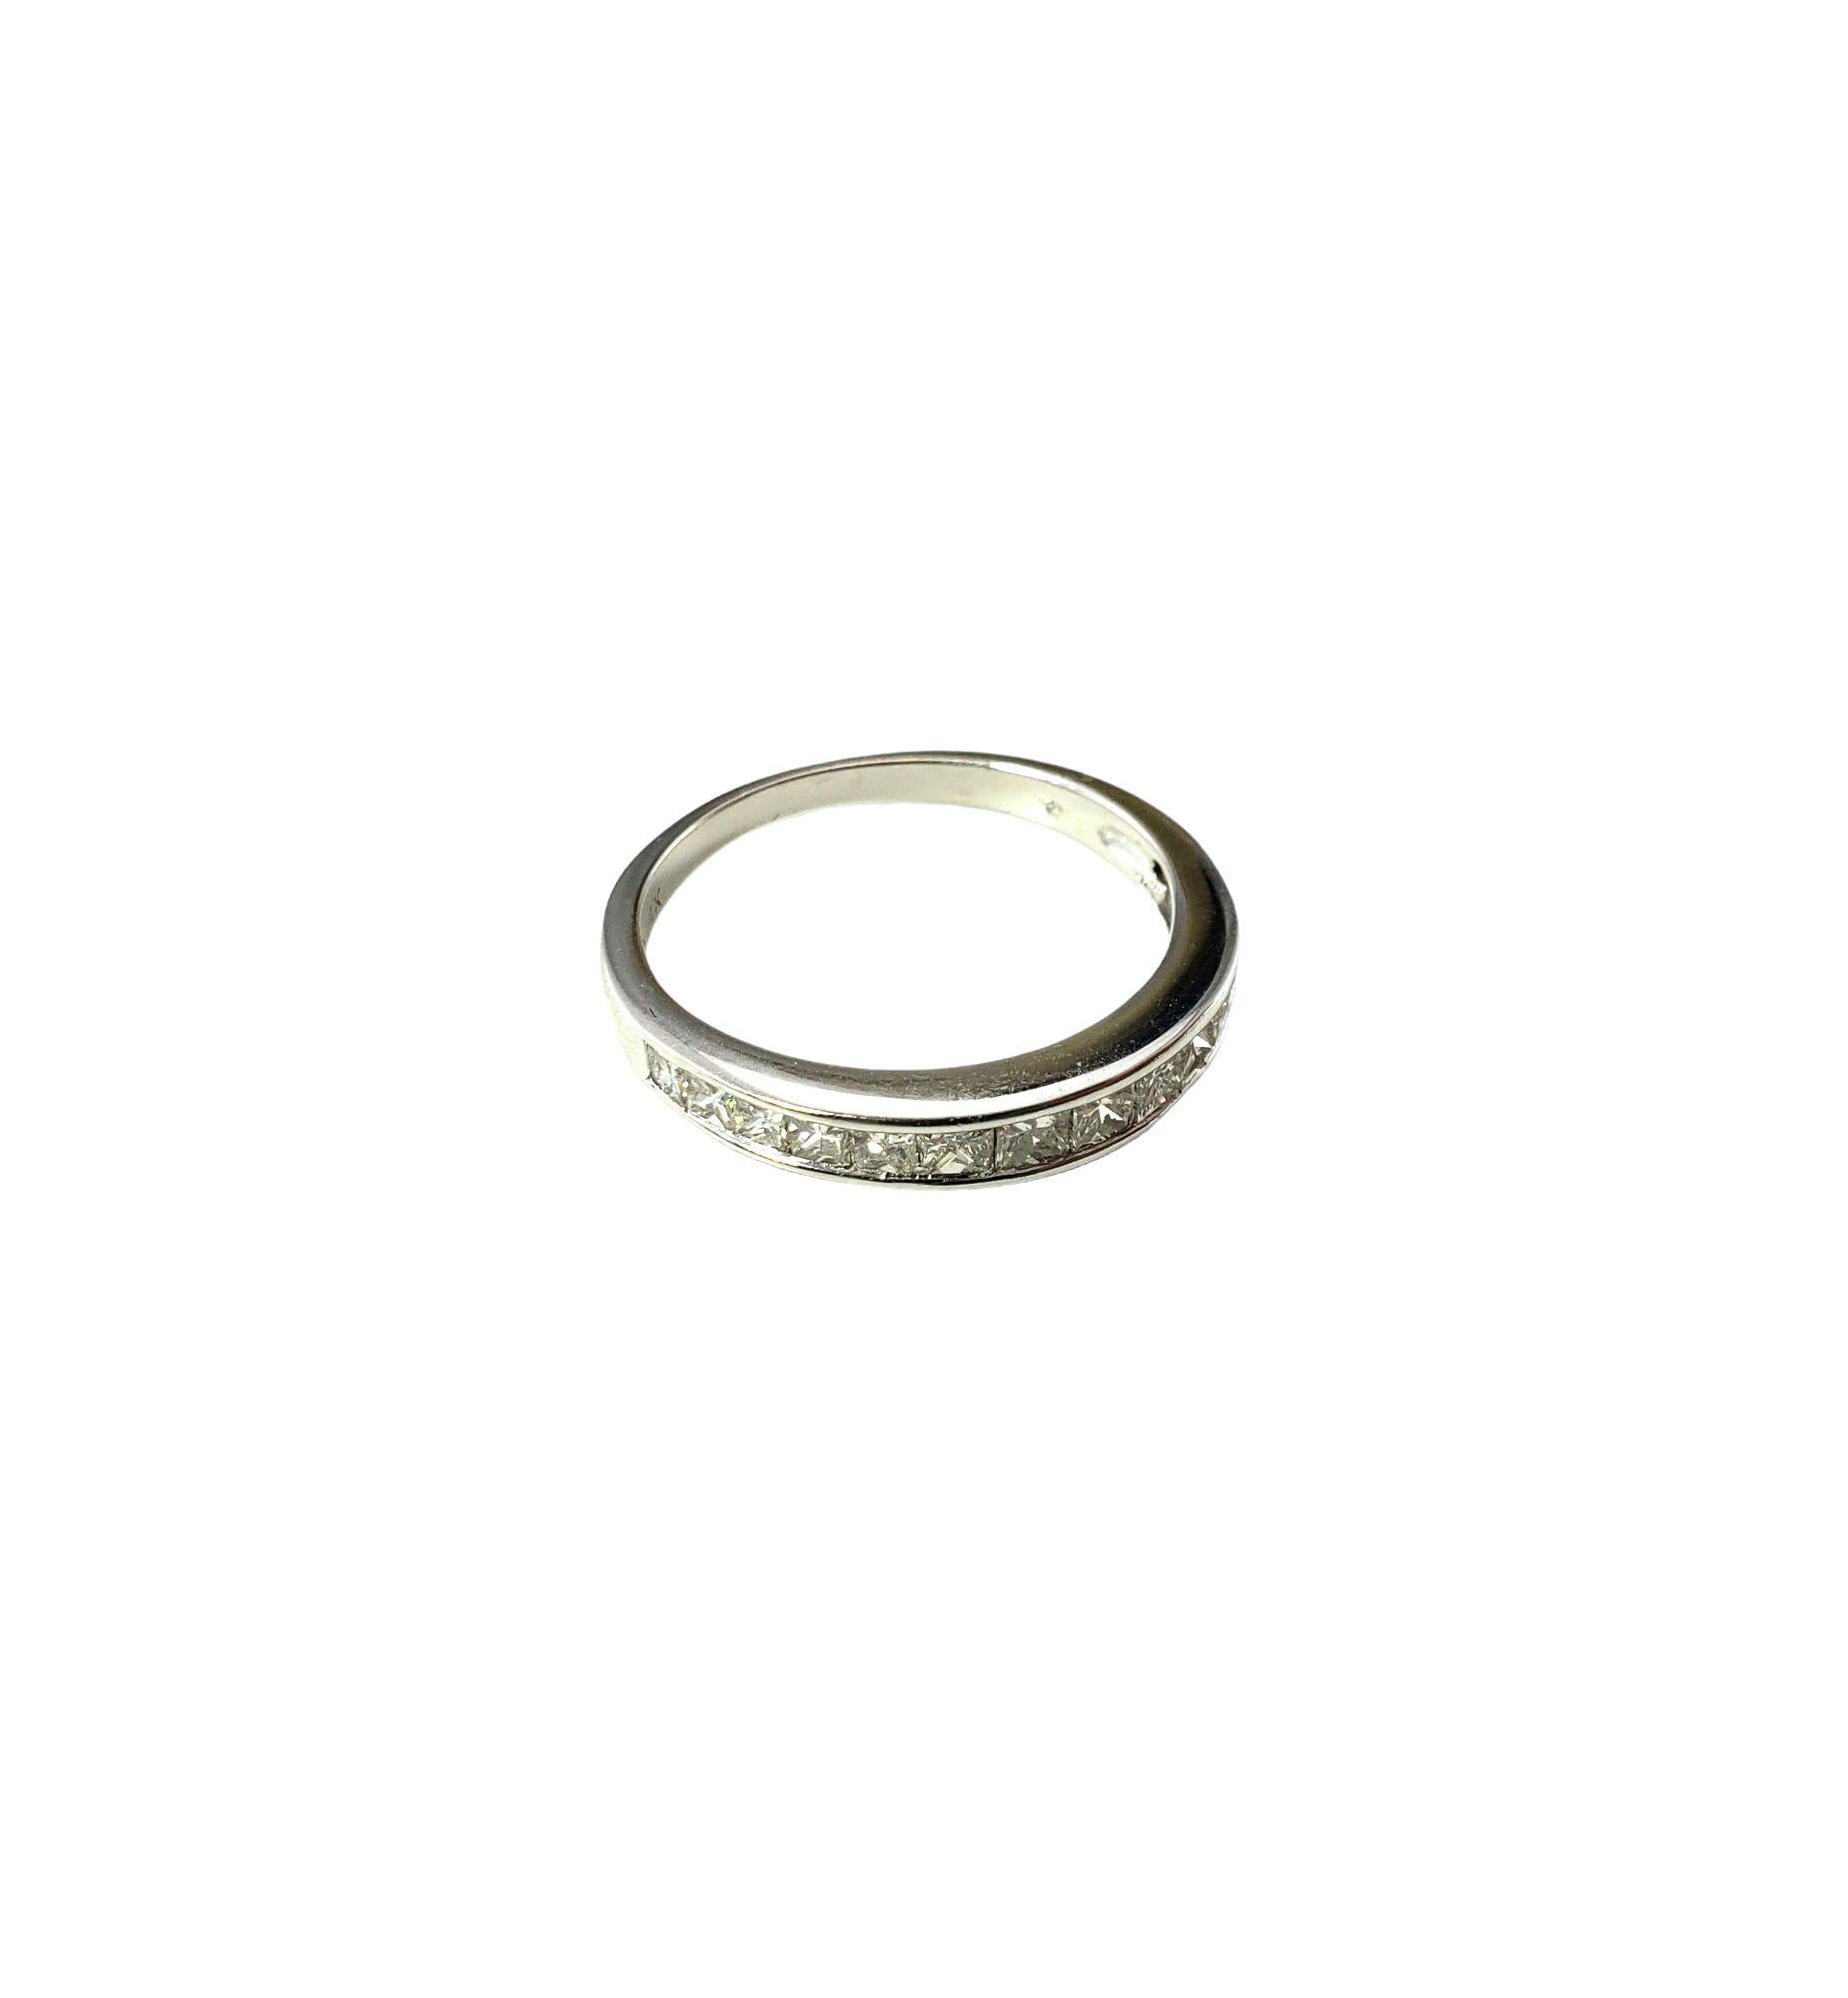 Women's 14K White Gold Princess Cut Diamond Wedding Band Ring Size 7.25 #15270 For Sale